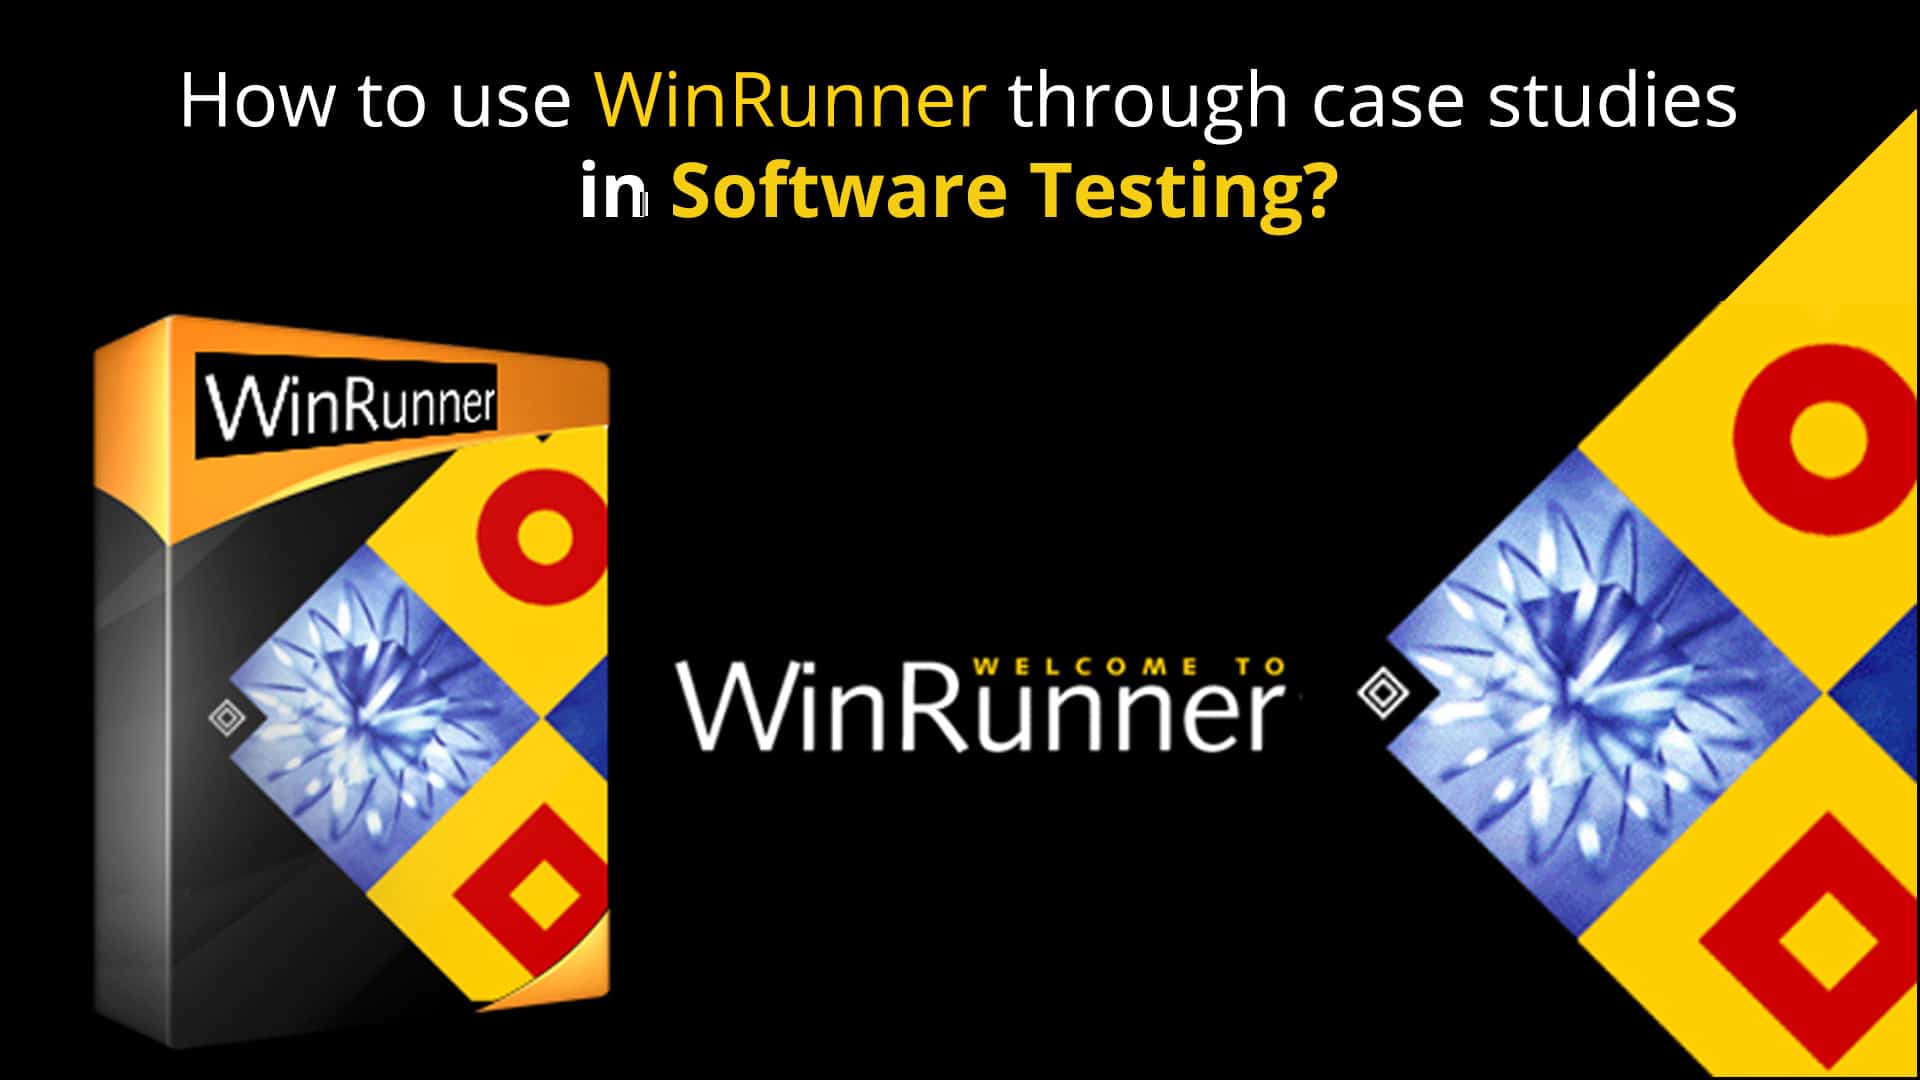 winrunner testing tool full version free download